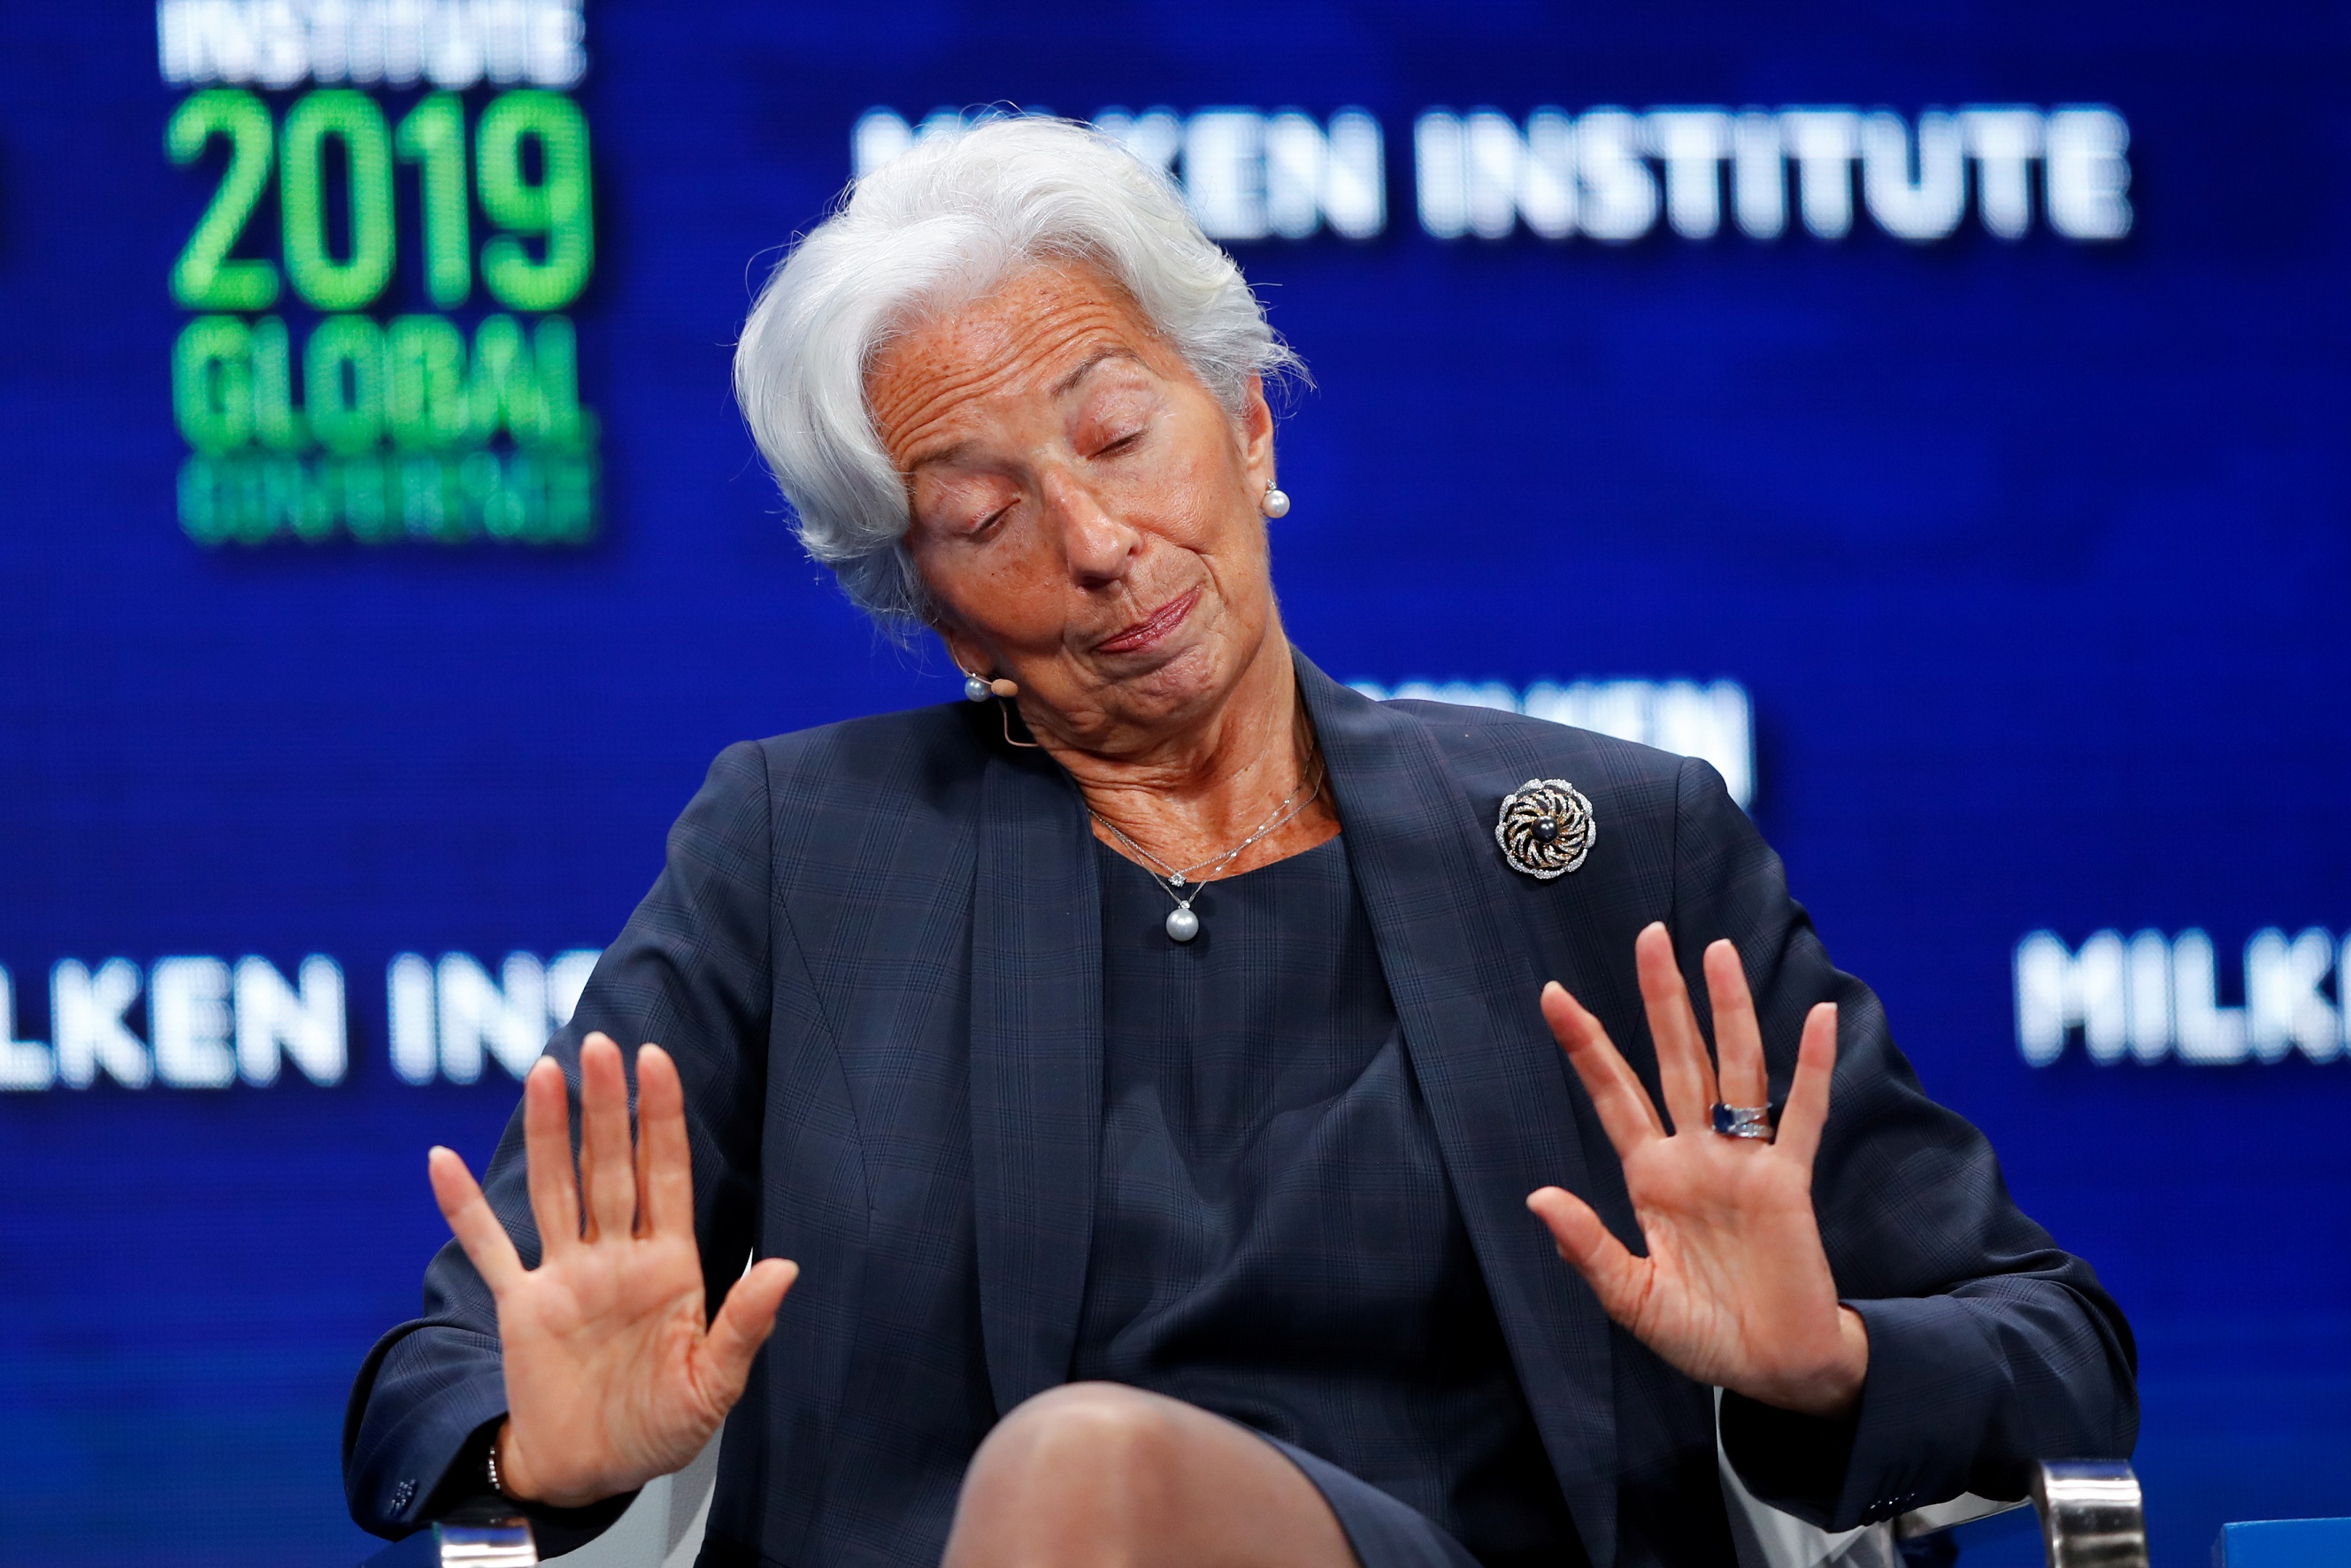 Christine Lagarde FMI